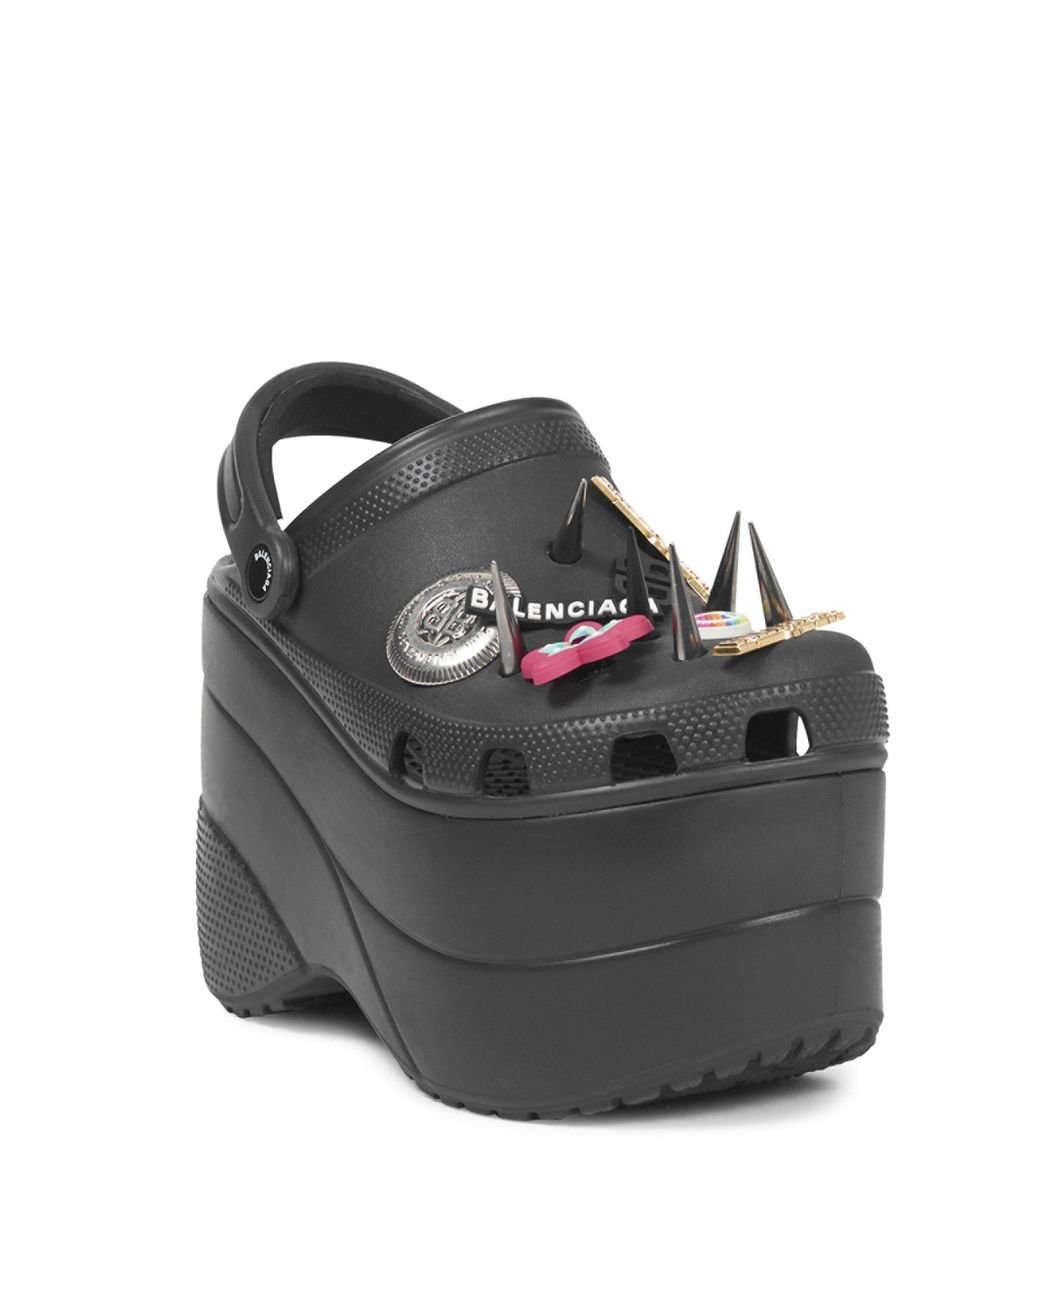 Balenciaga Black Foam Platform Crocs With Spikes | Lyst